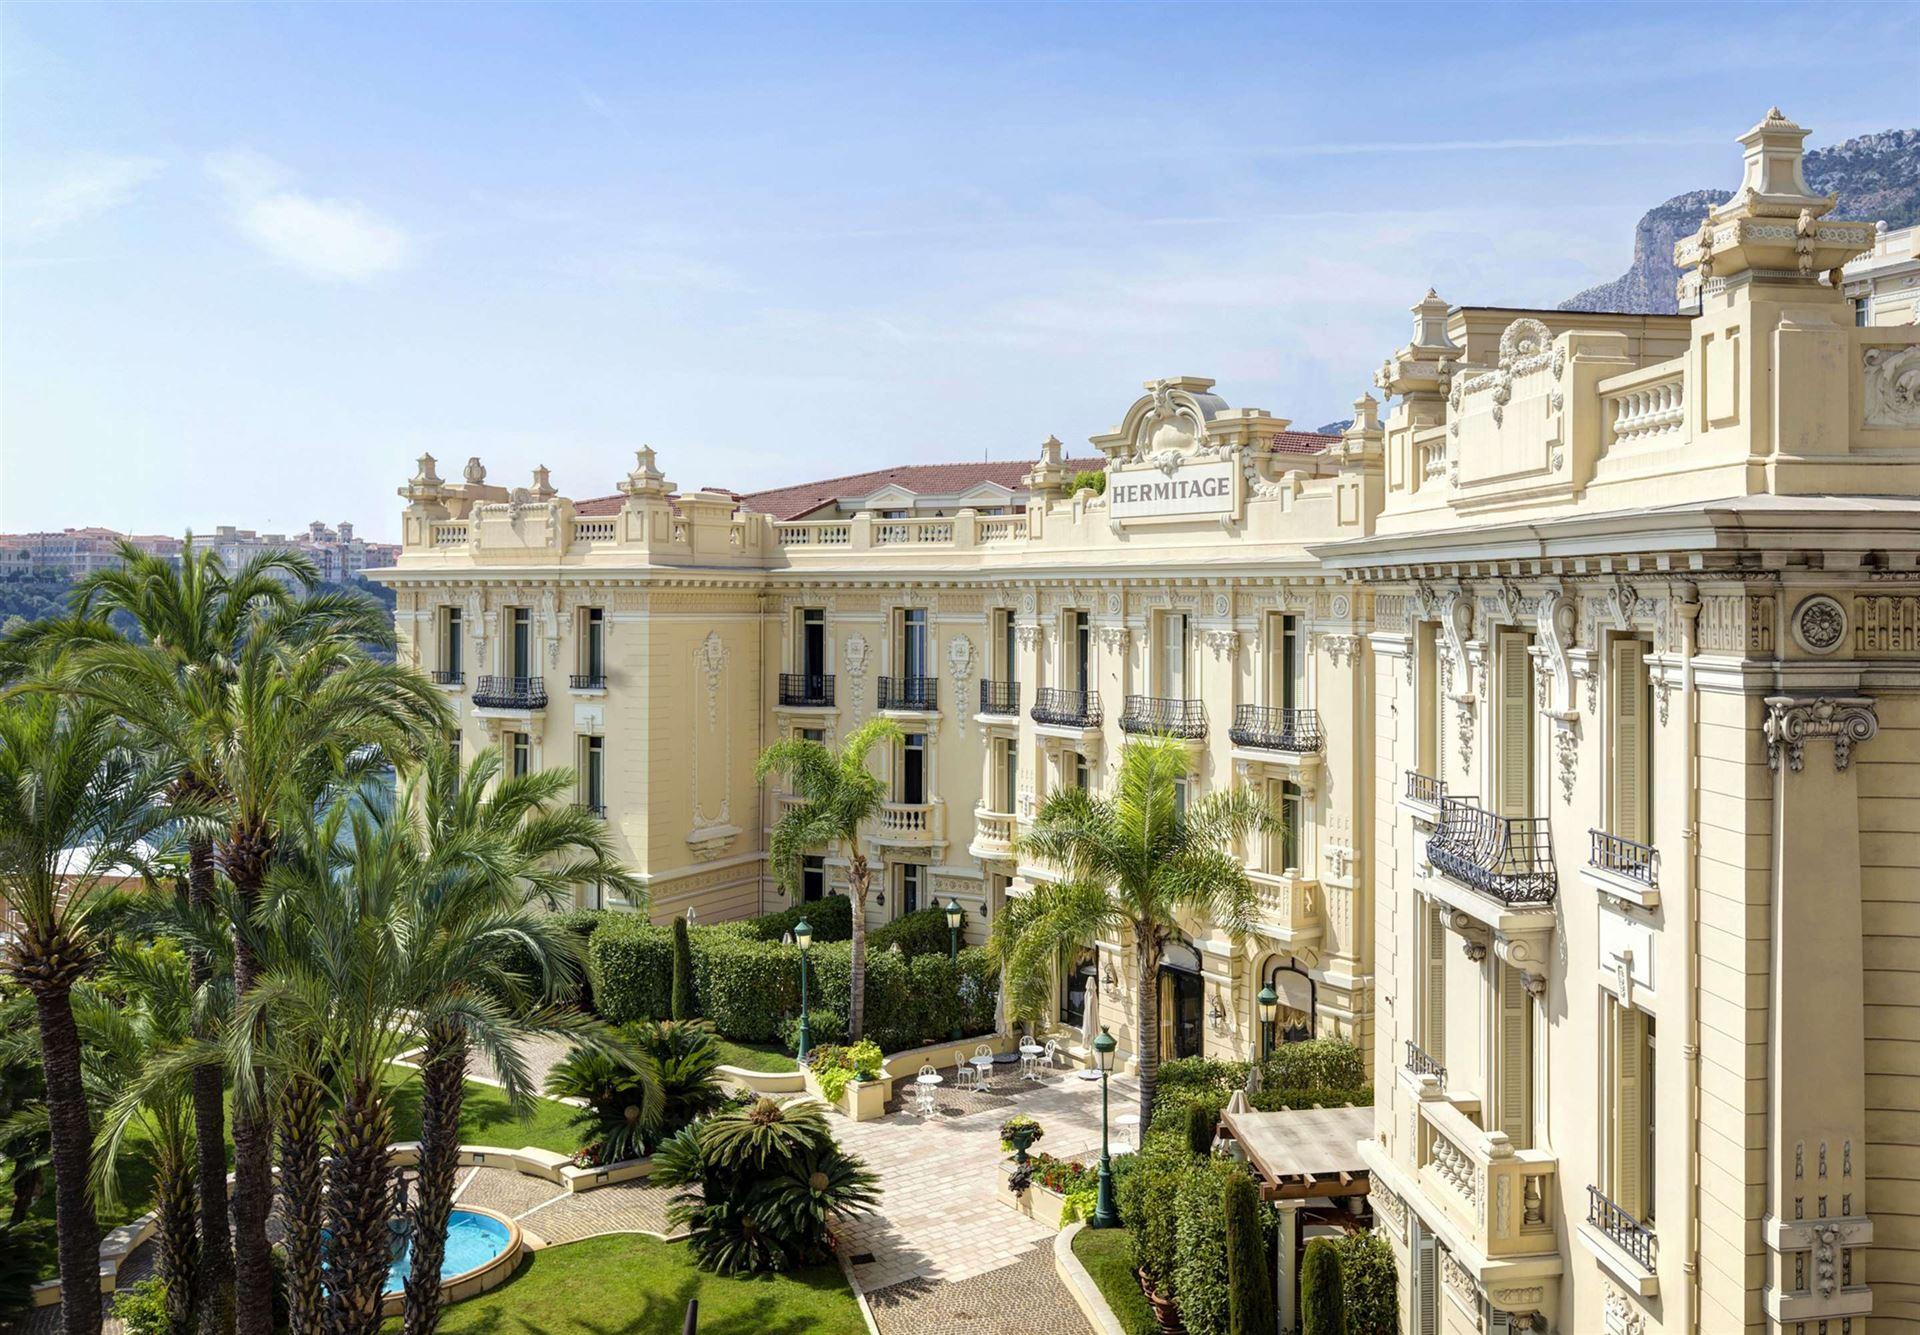 Hotel Hermitage Monte Carlo luxe hotel deals